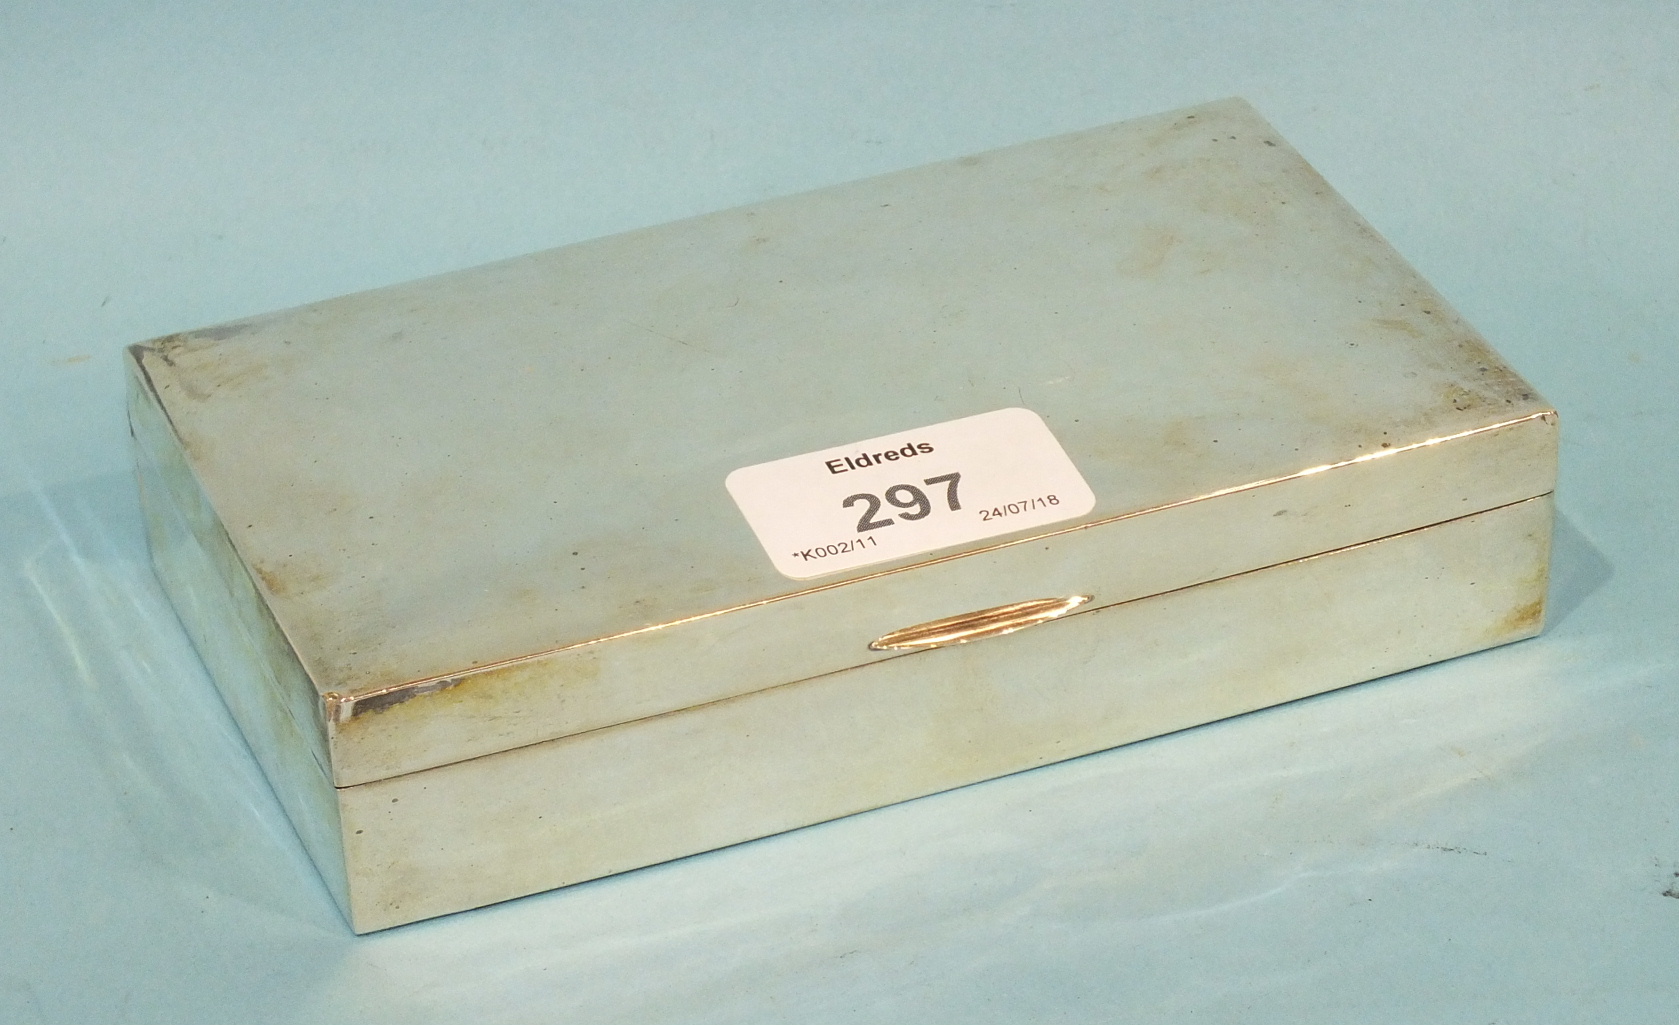 A silver plain rectangular cigarette box, maker S & M, Birmingham 1956, 15 x 8.5 x 3cm.